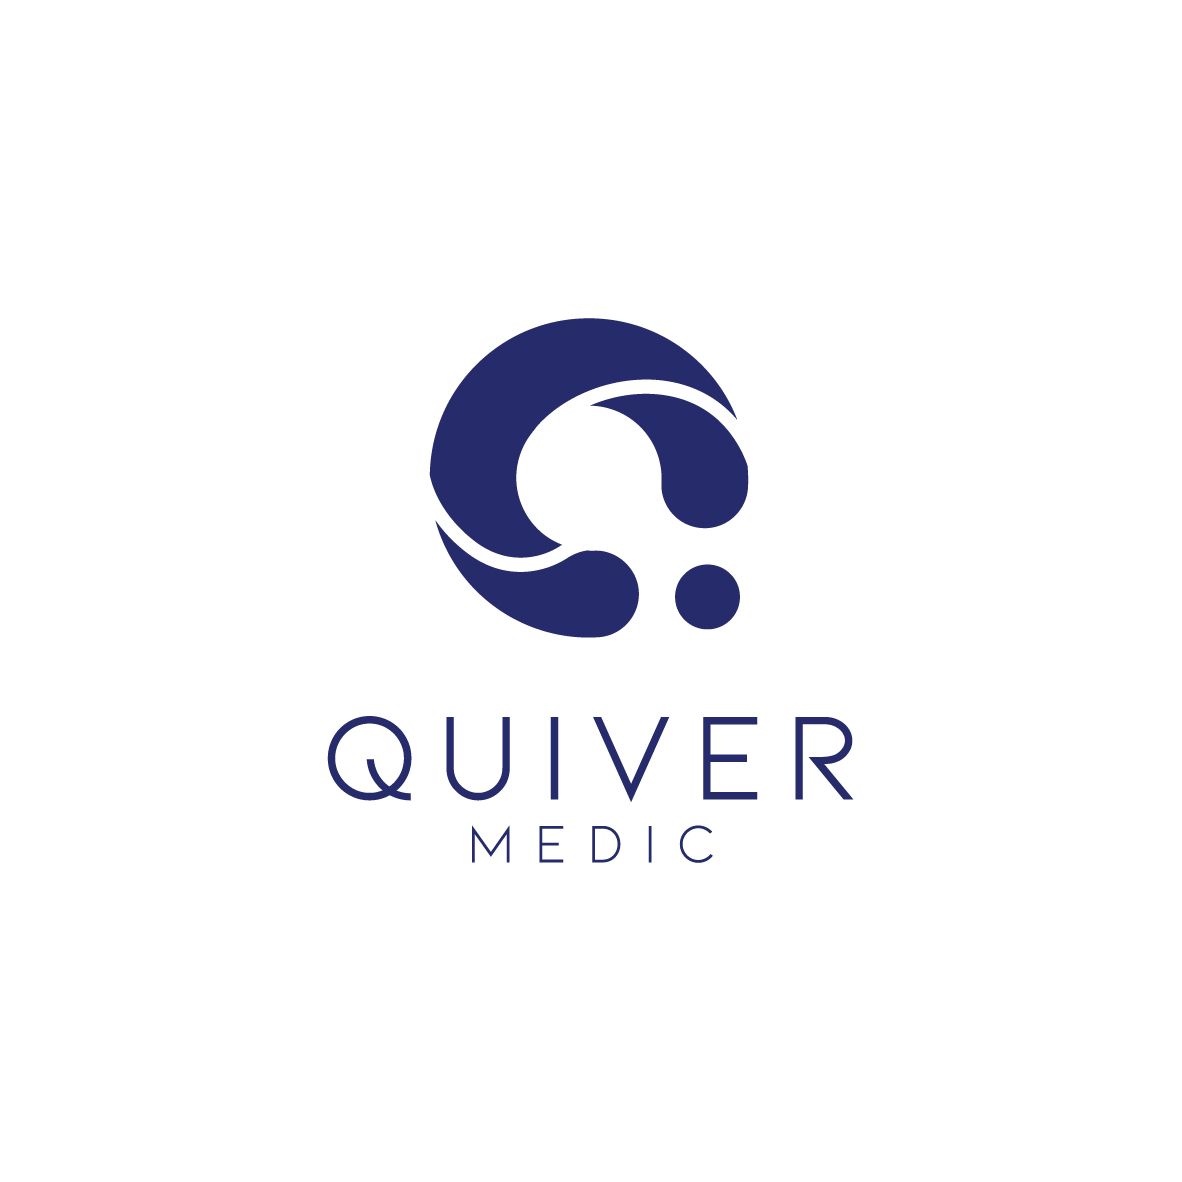 Quiver Medic Ltd logo